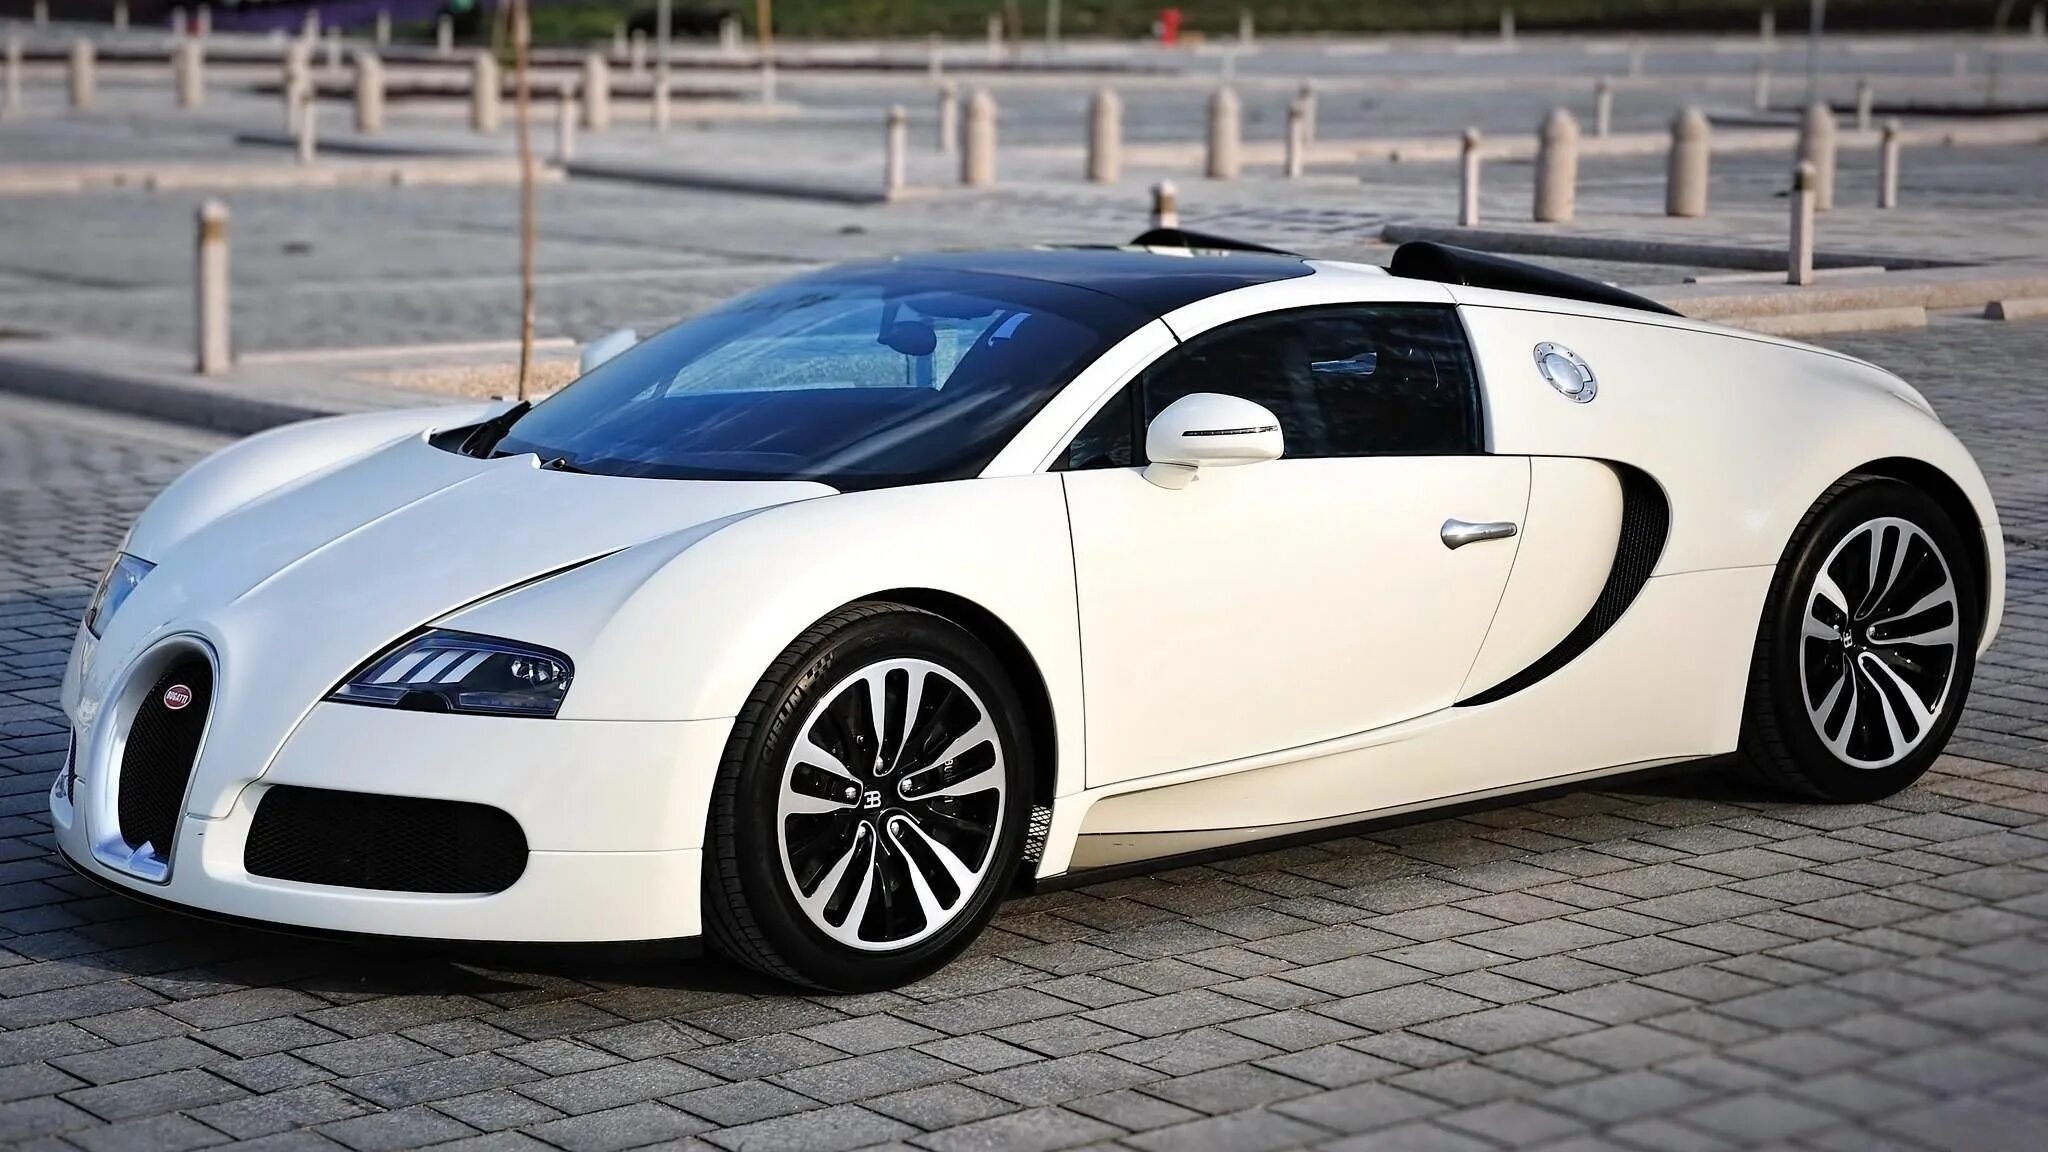 Bugatti Veyron 16.4 Grand Sport. Бугатти Вейрон 2008. Bugatti Veyron 16.4. Бугатти Вейрон 2010. Дорогой автомобиль в казани